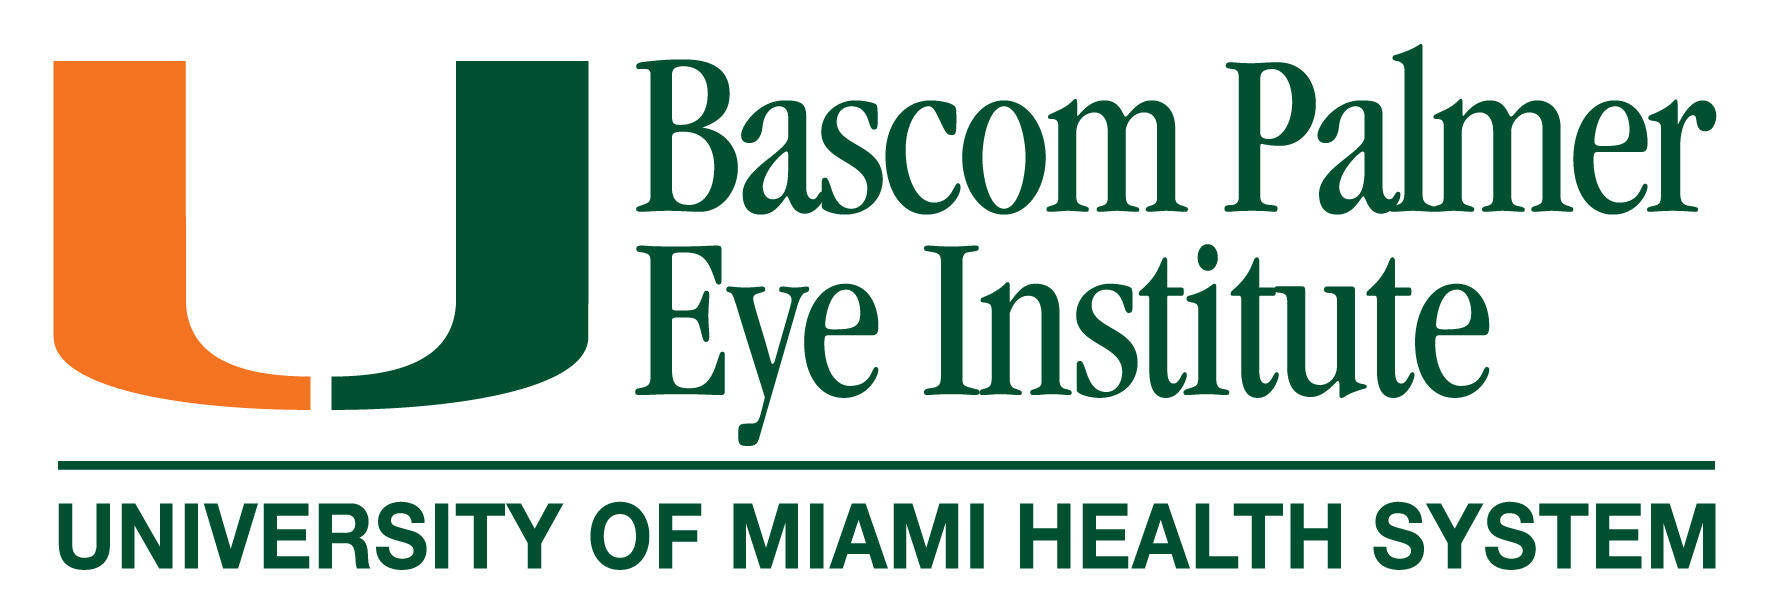 Bascom Palmer Eye Institute 